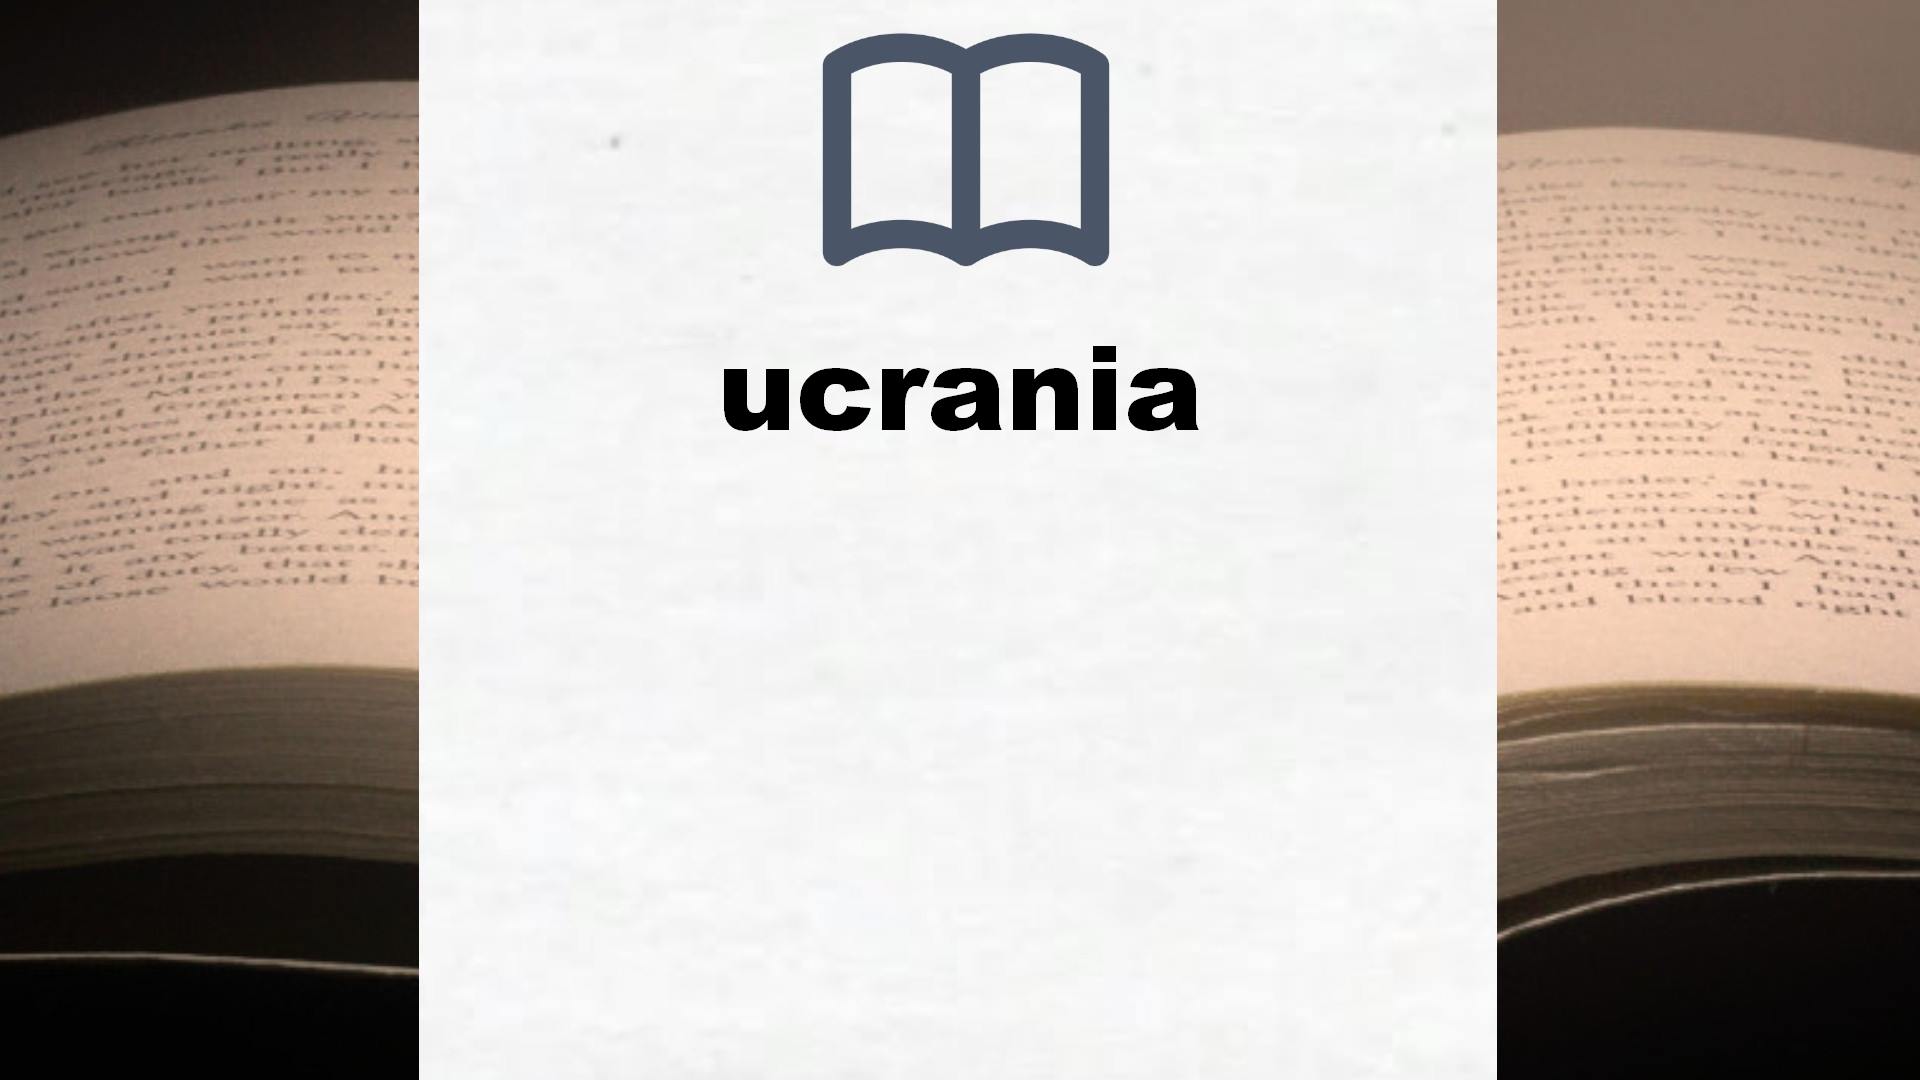 Libros sobre ucrania